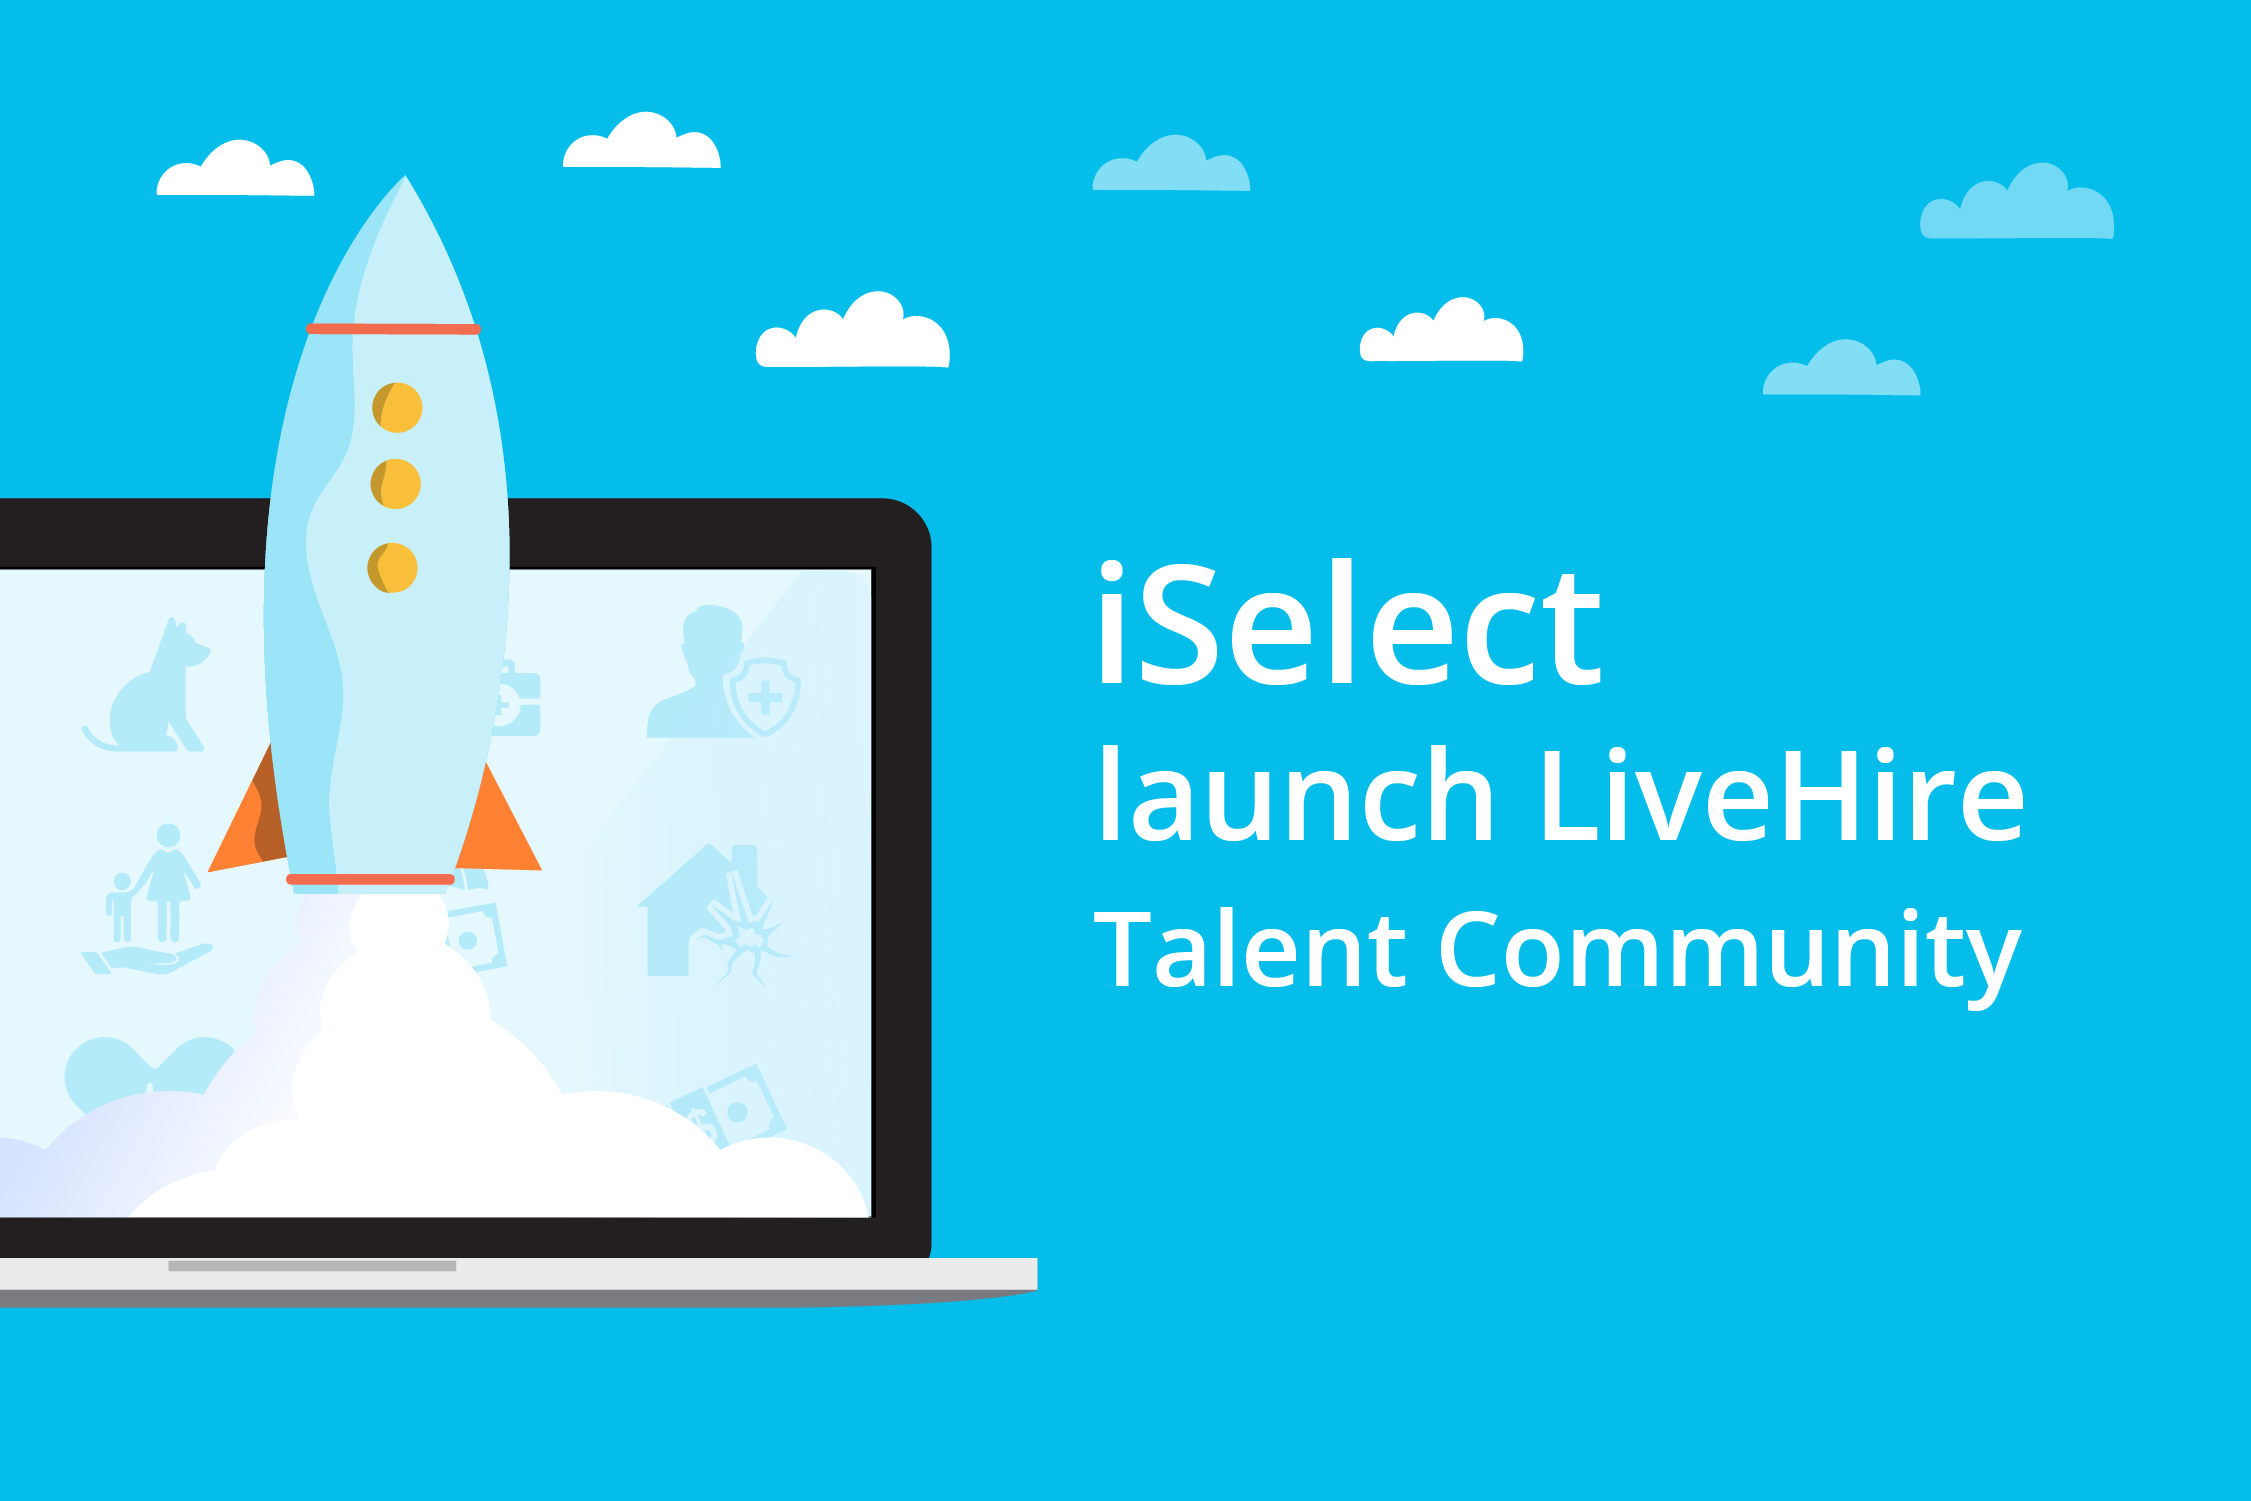 iSelect Launch LiveHire Talent Community